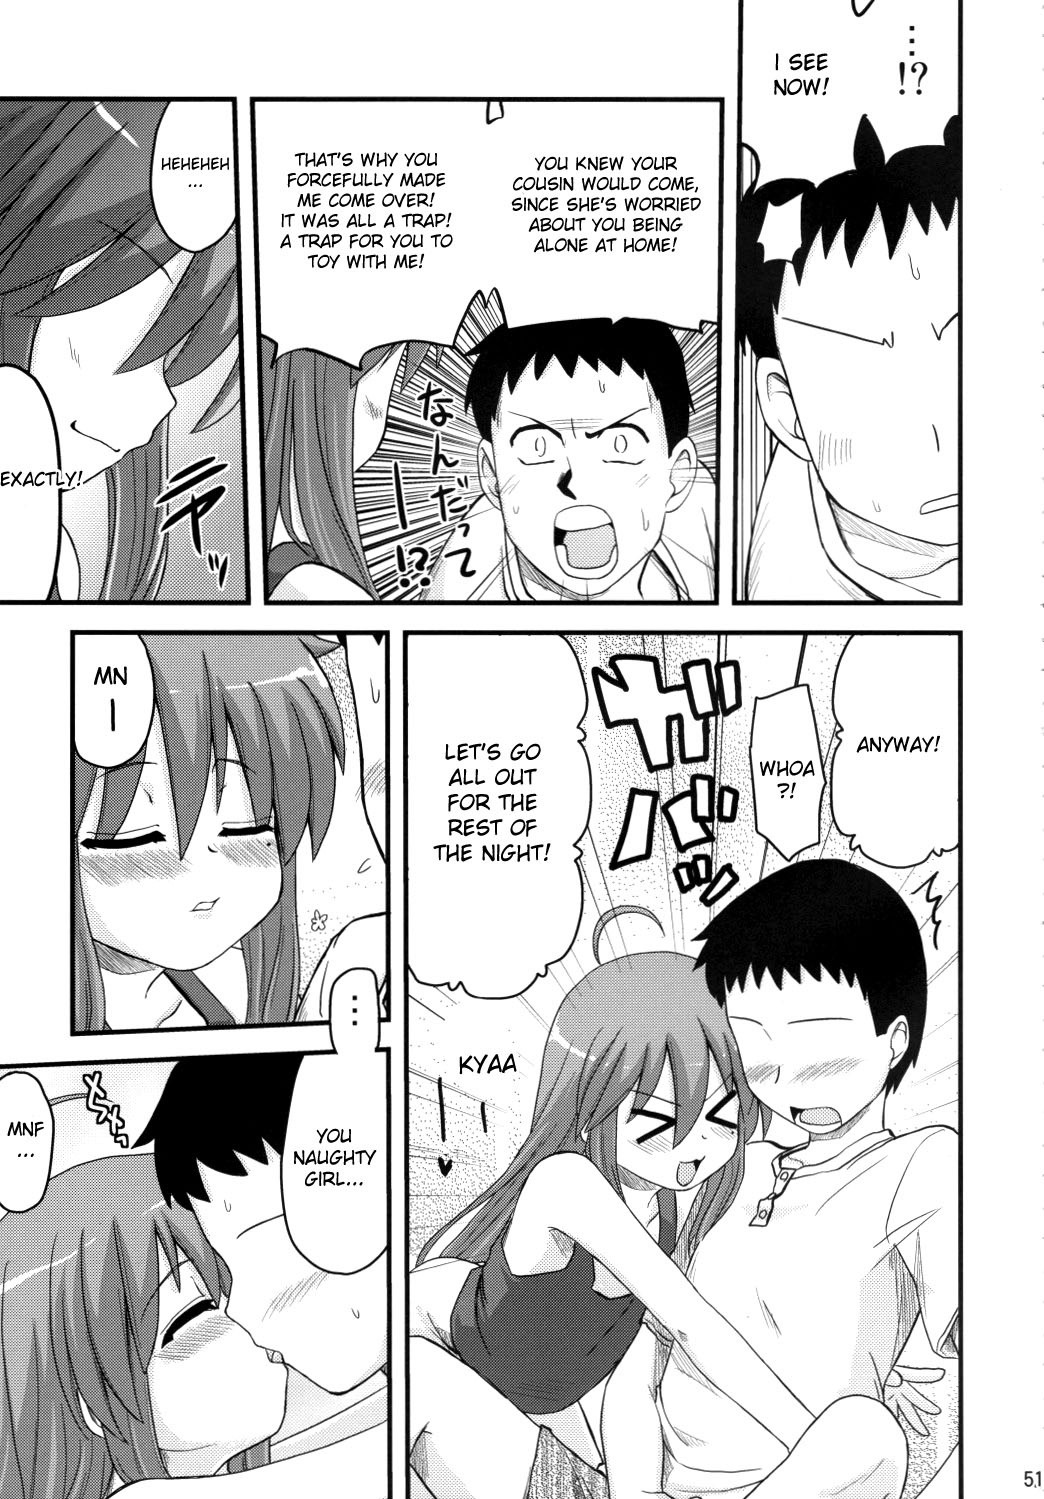 Konata and Oh-zu 4 people each and every one + 1 hentai manga picture 47